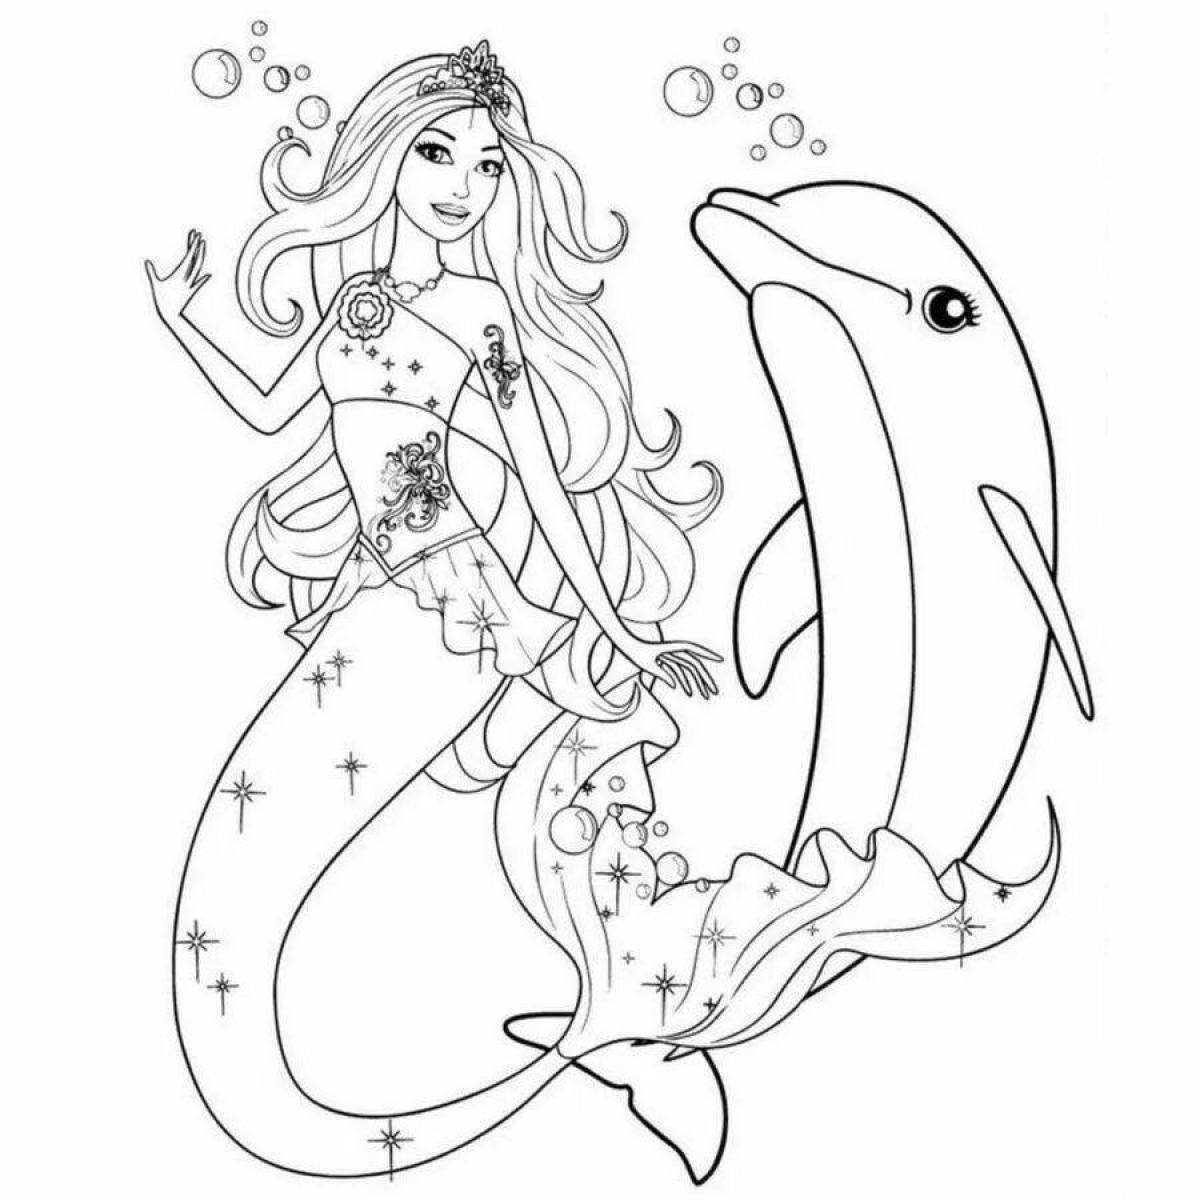 Dreamy barbie mermaid coloring book for kids